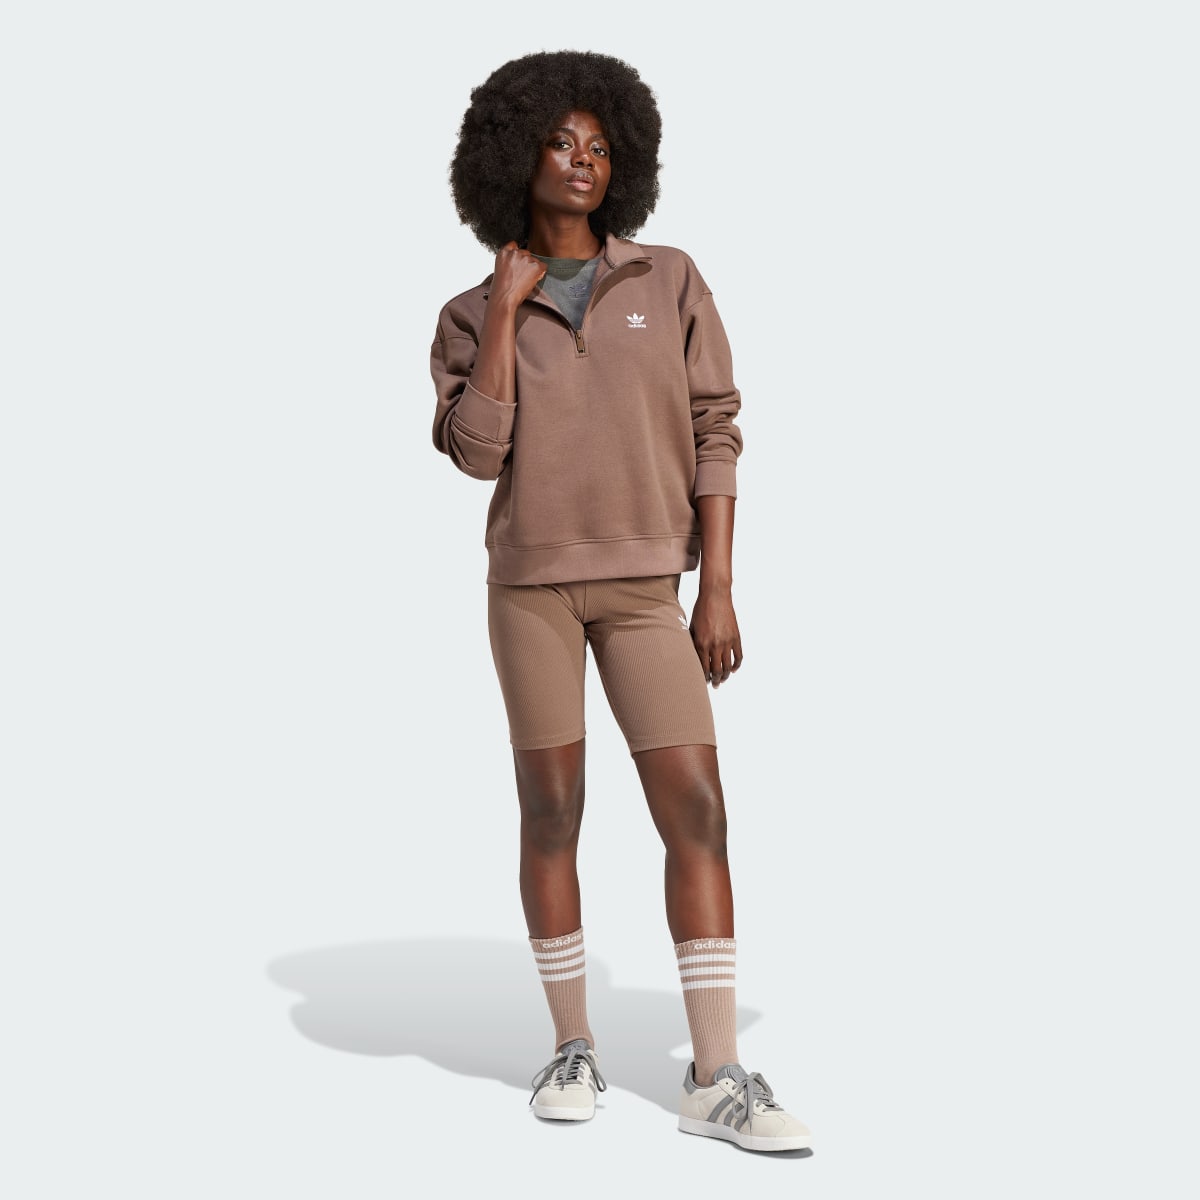 Adidas Sweatshirt Essentials. 4